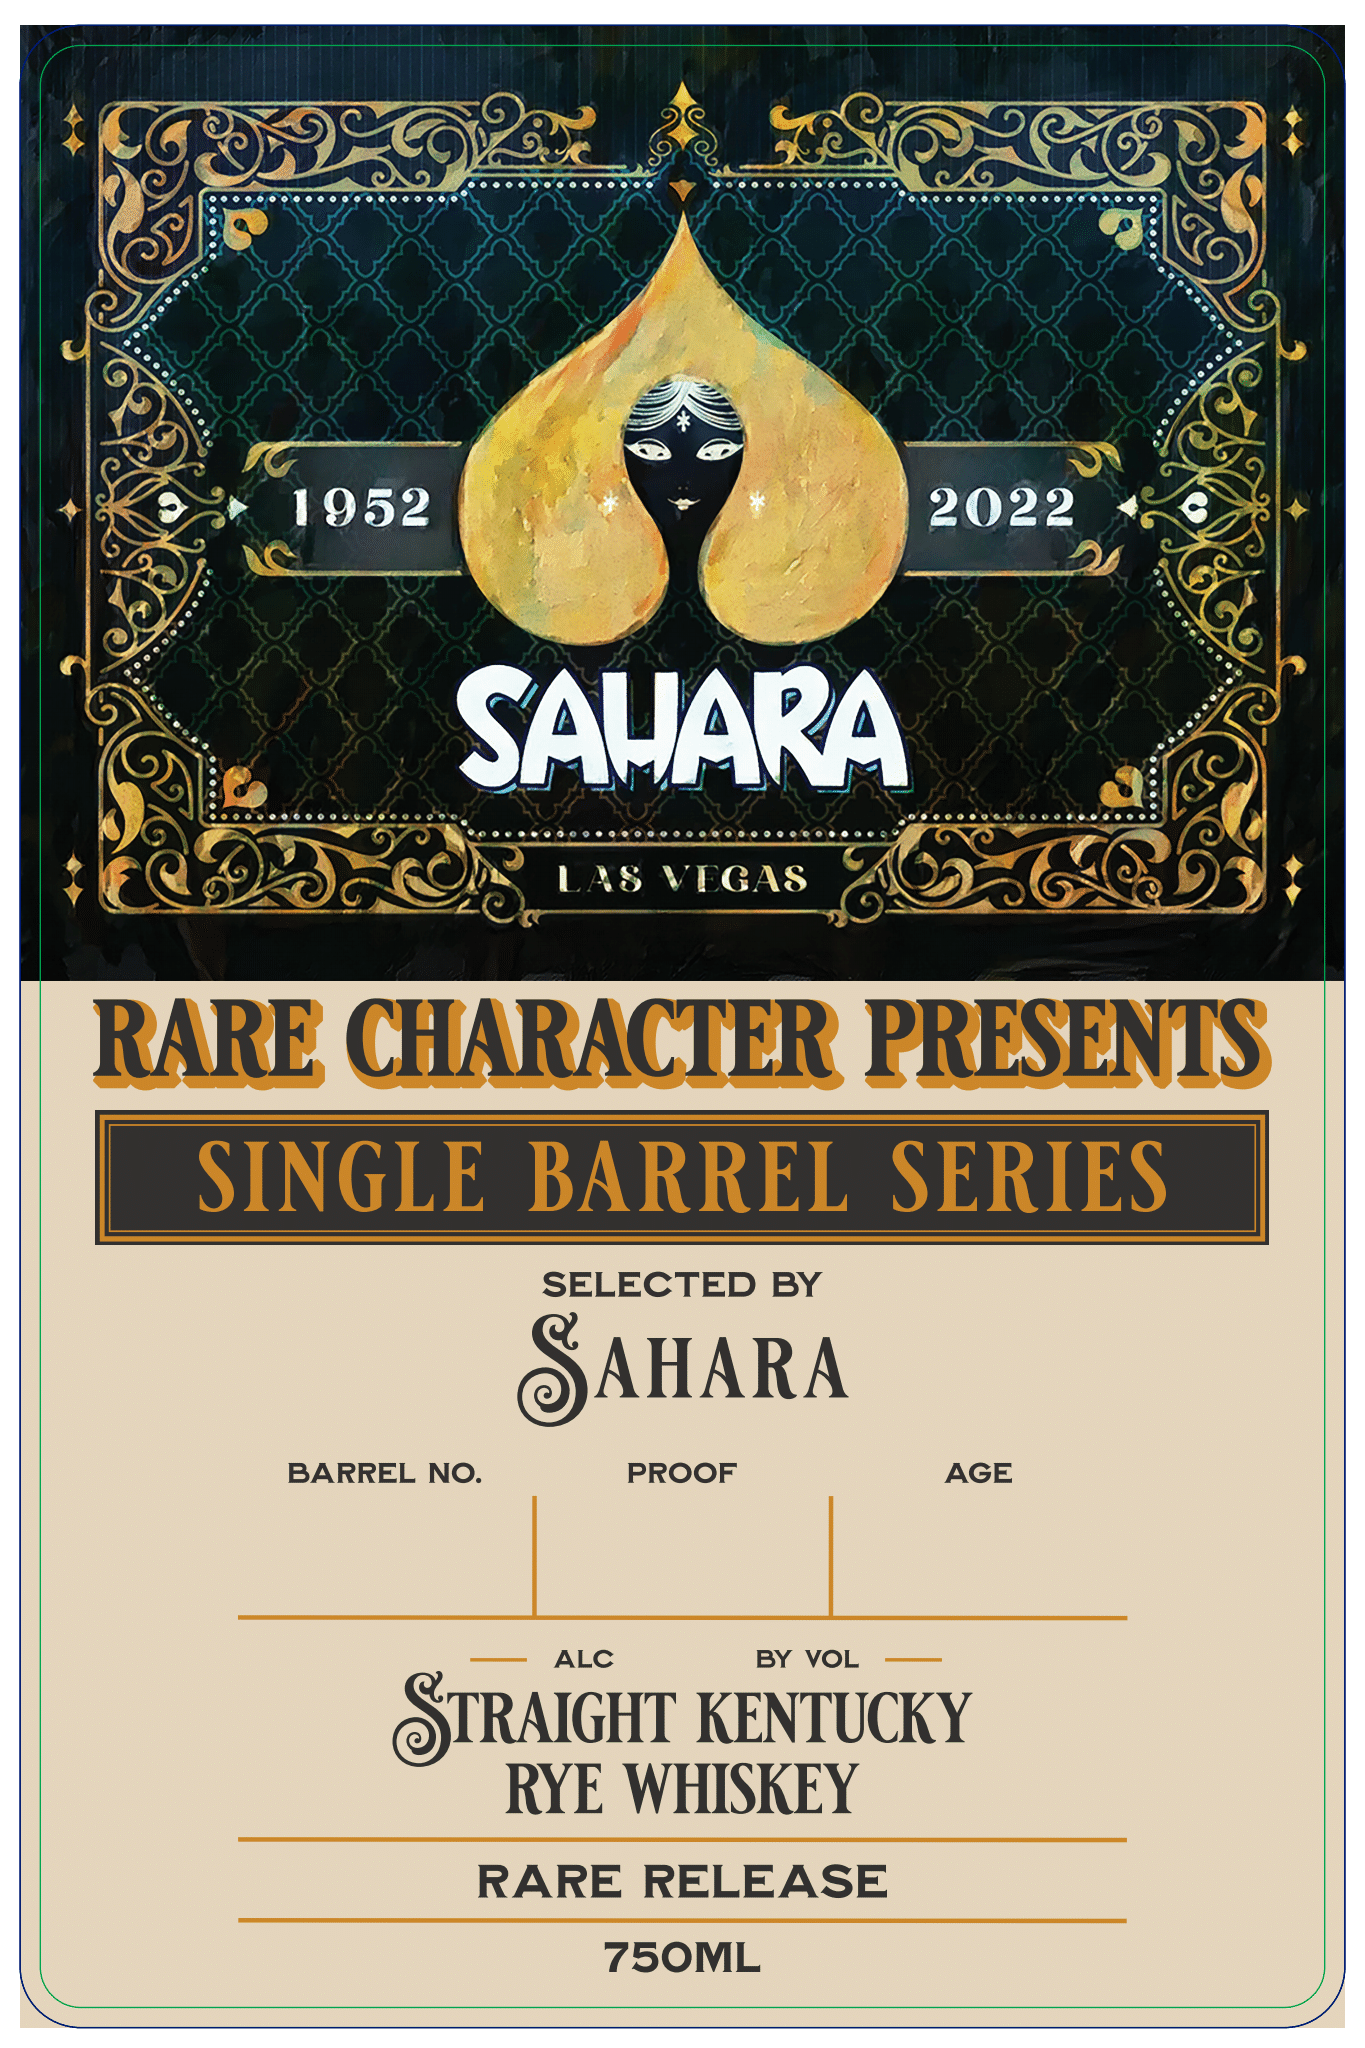 SAHARA Las Vegas Bourbon Label